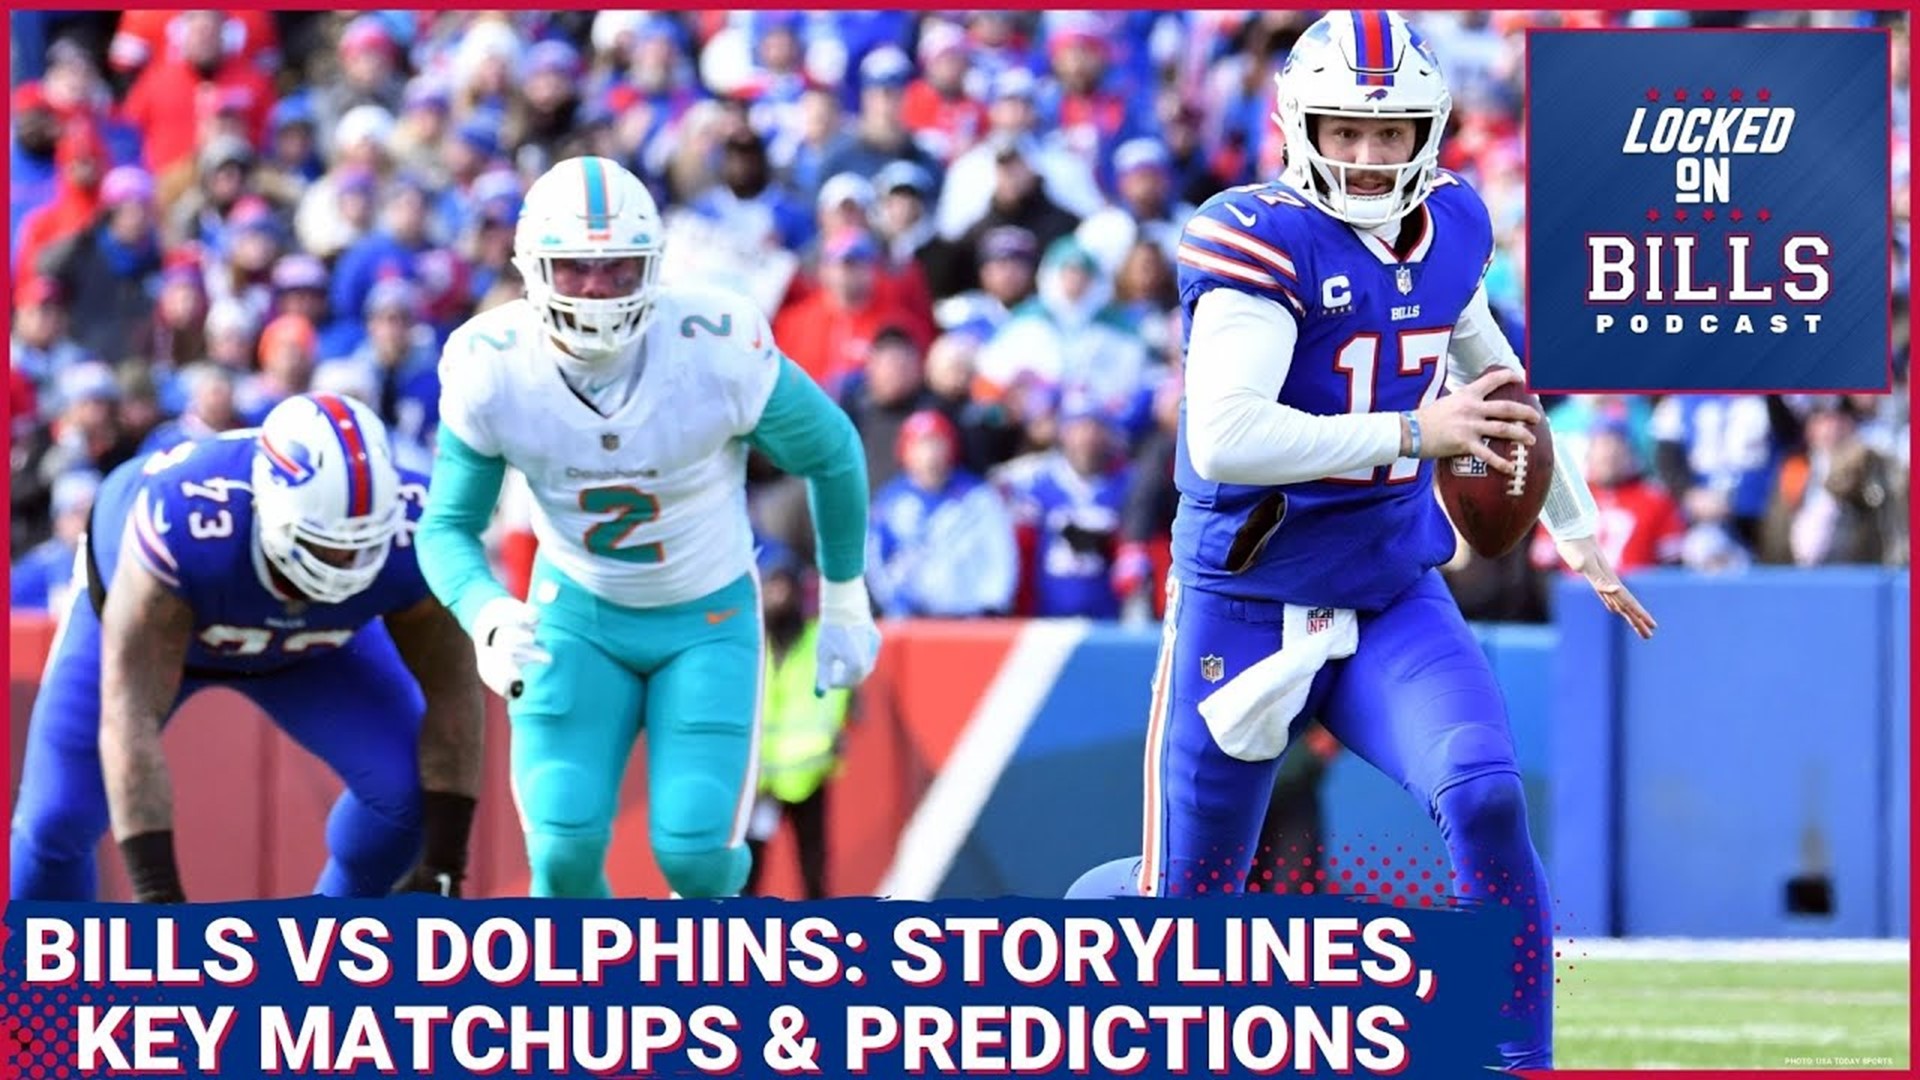 Buffalo Bills vs Miami Dolphins: Top Storylines, Matchups